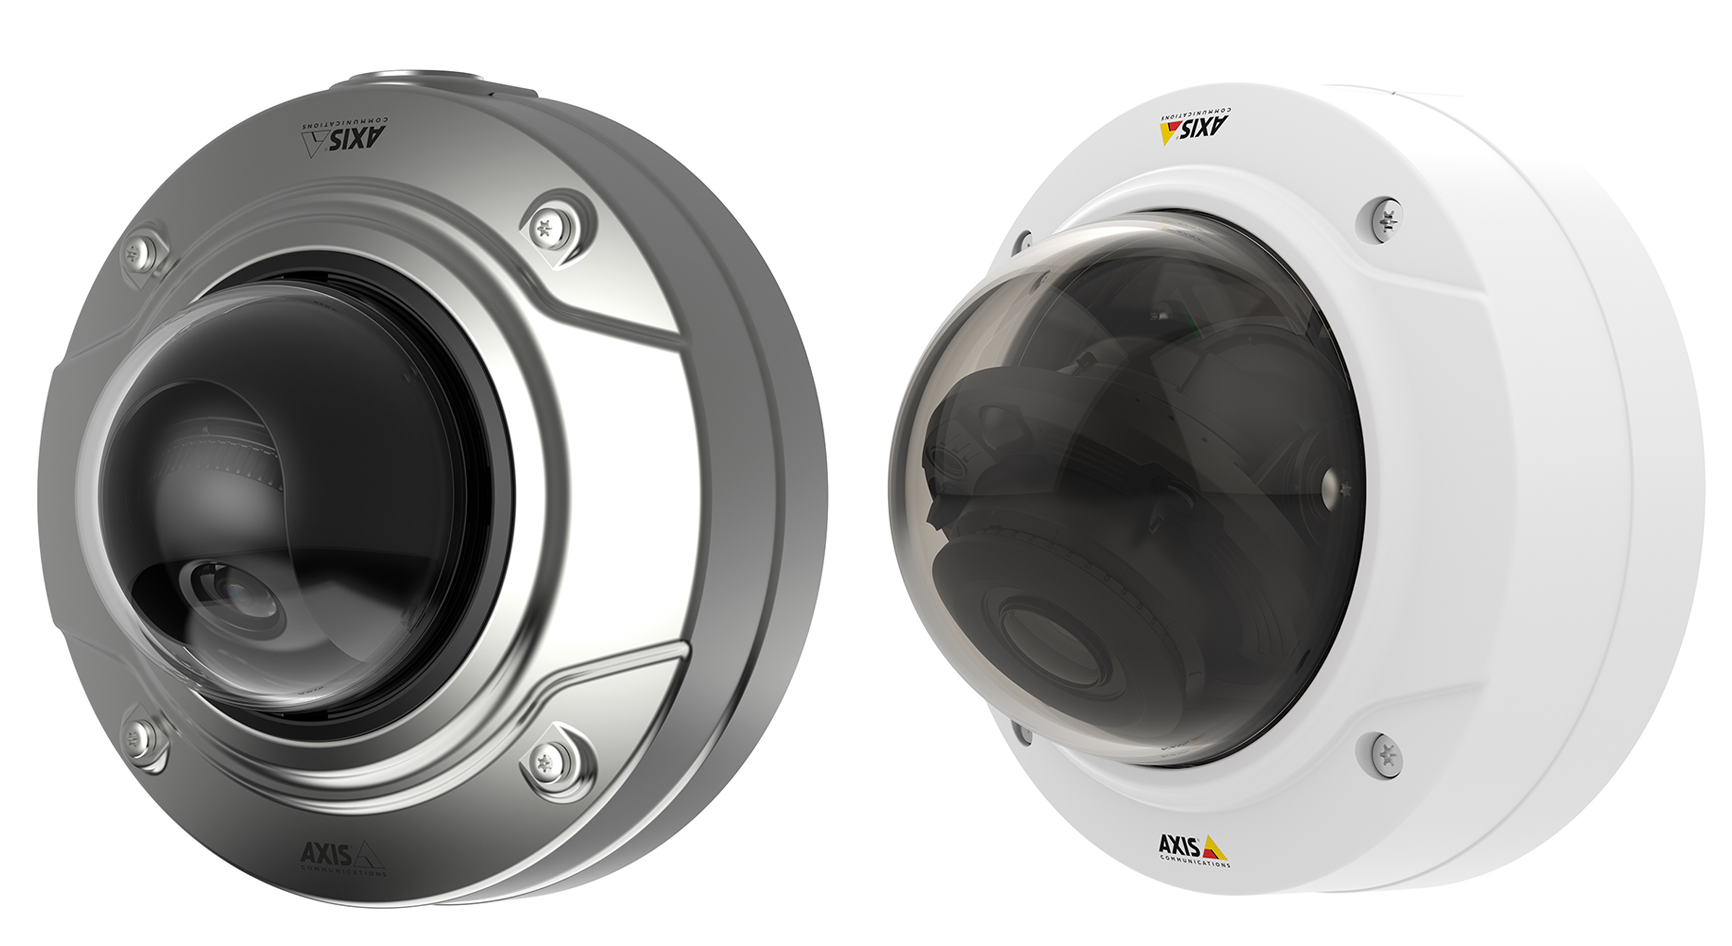 Axis анонсировала новые серии камер AXIS P32 и AXIS Q35 с поддержкой Forensic WDR